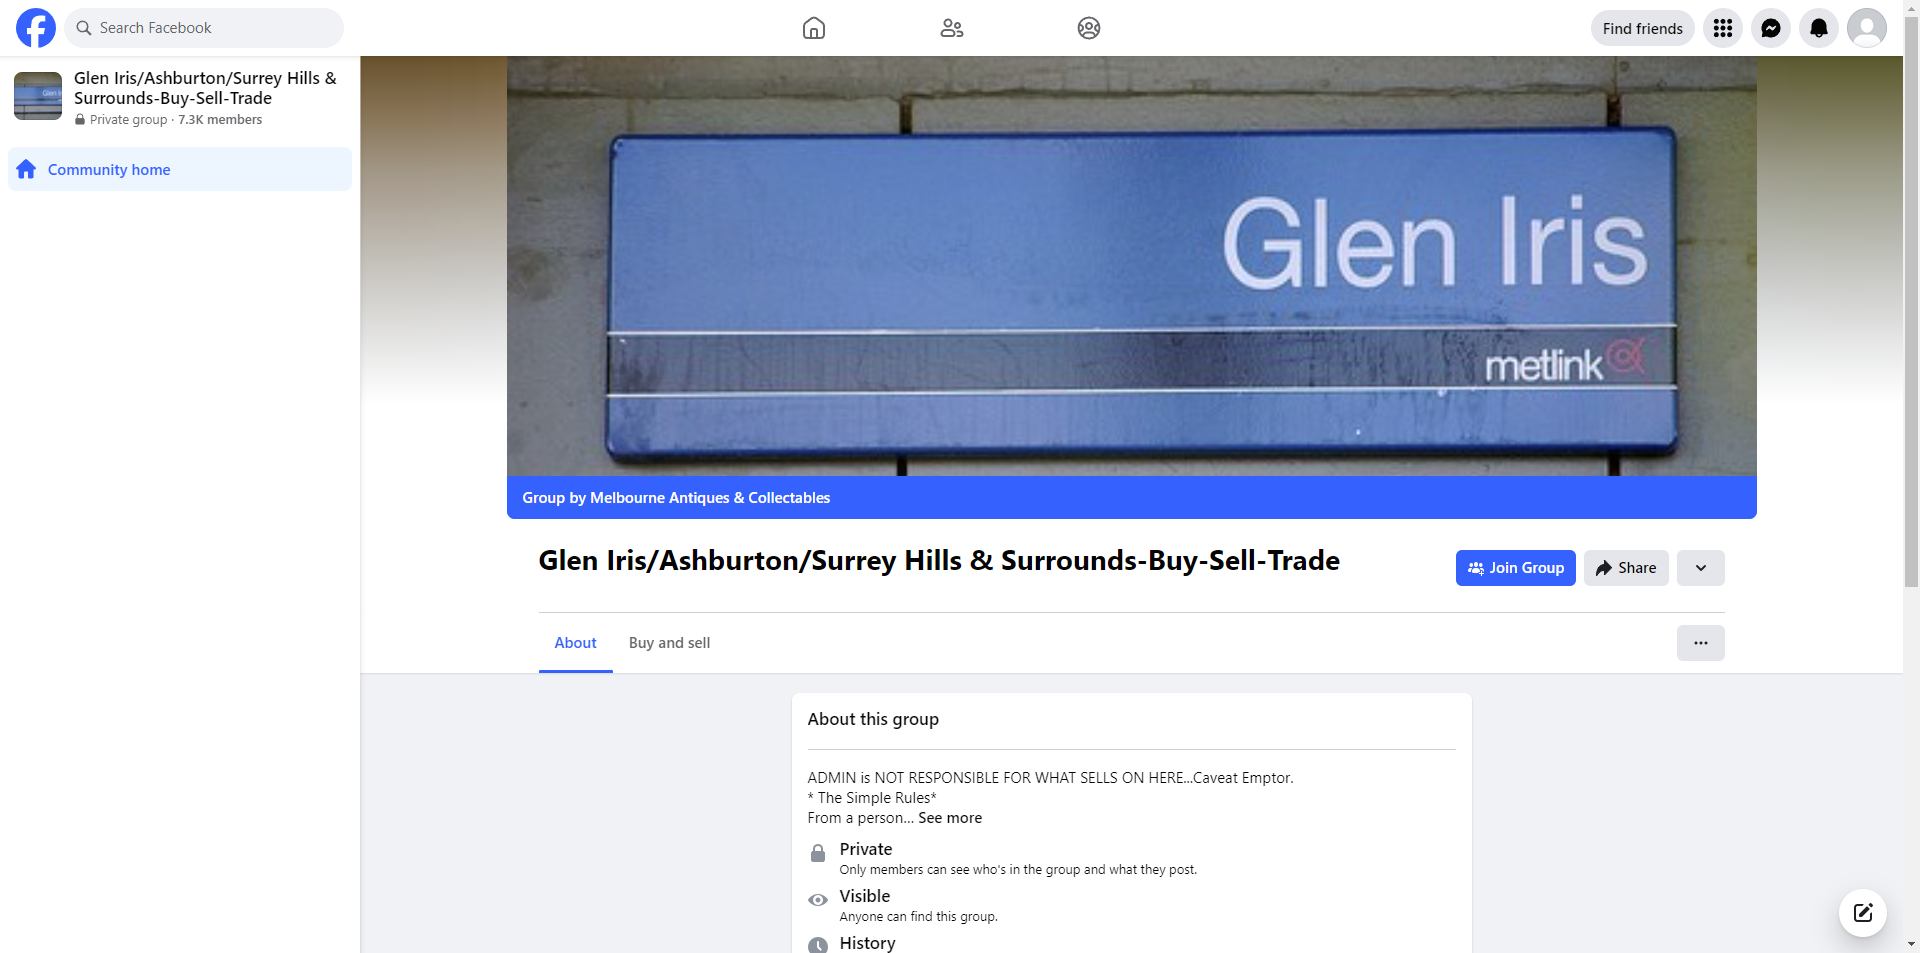 Glen Iris/Ashburton/Surrey Hills & Surrounds-Buy-Sell-Trade